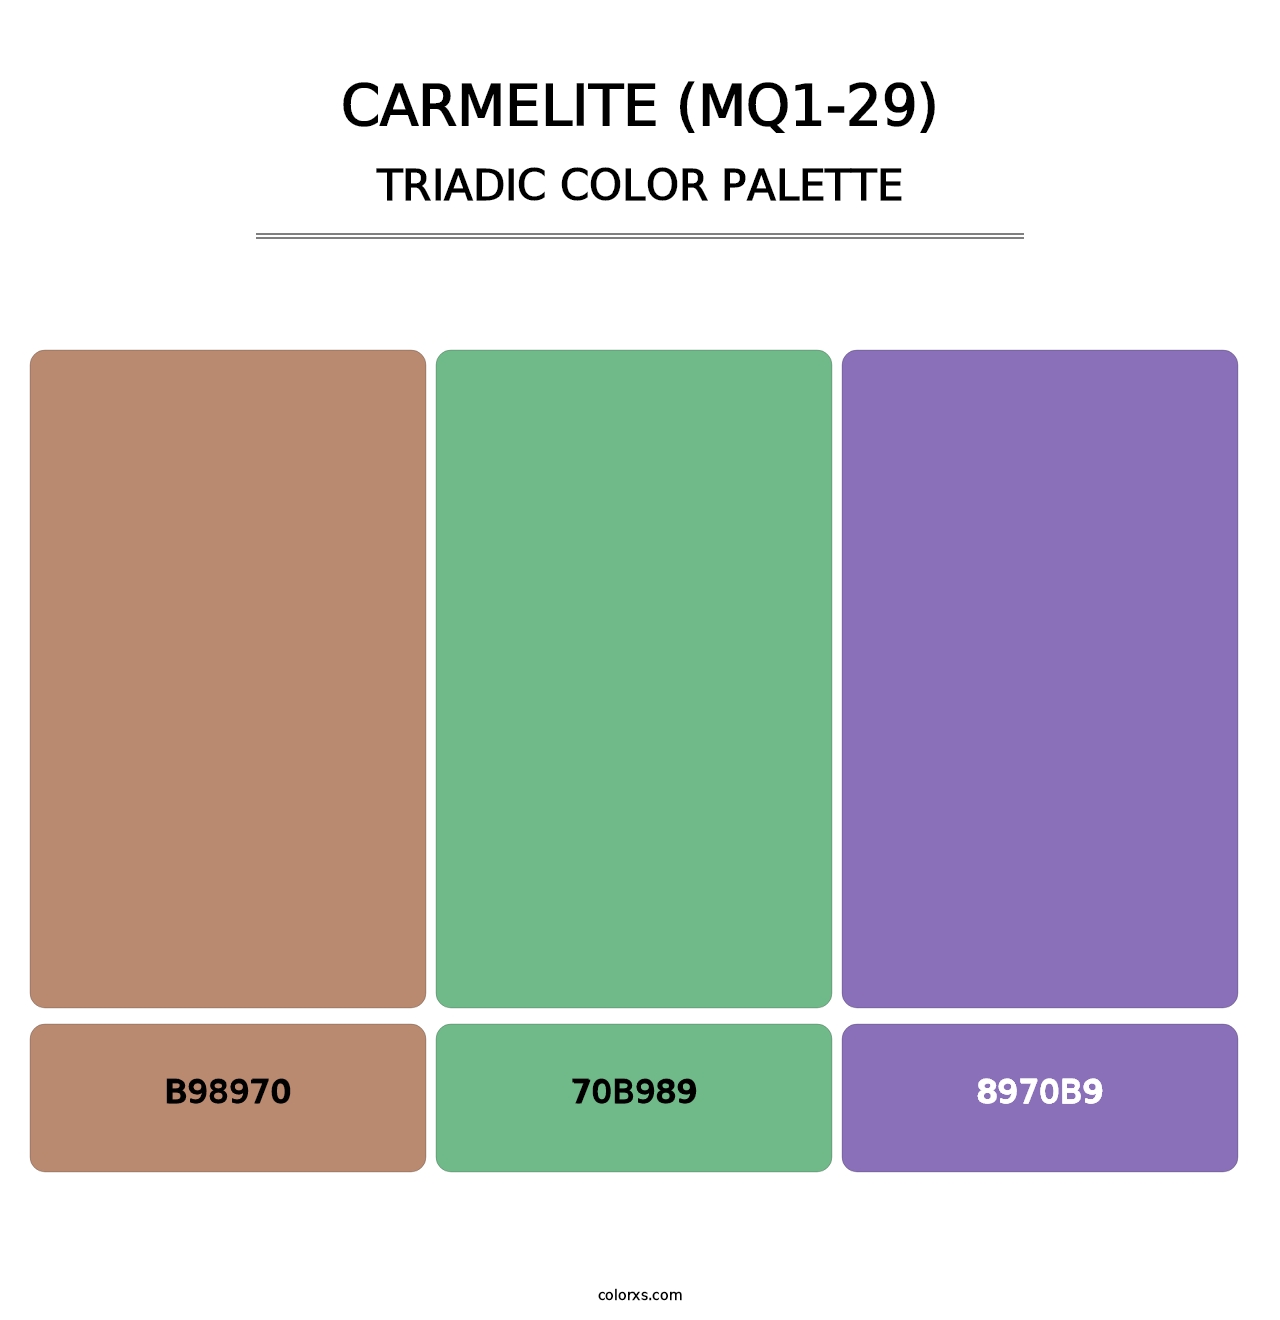 Carmelite (MQ1-29) - Triadic Color Palette